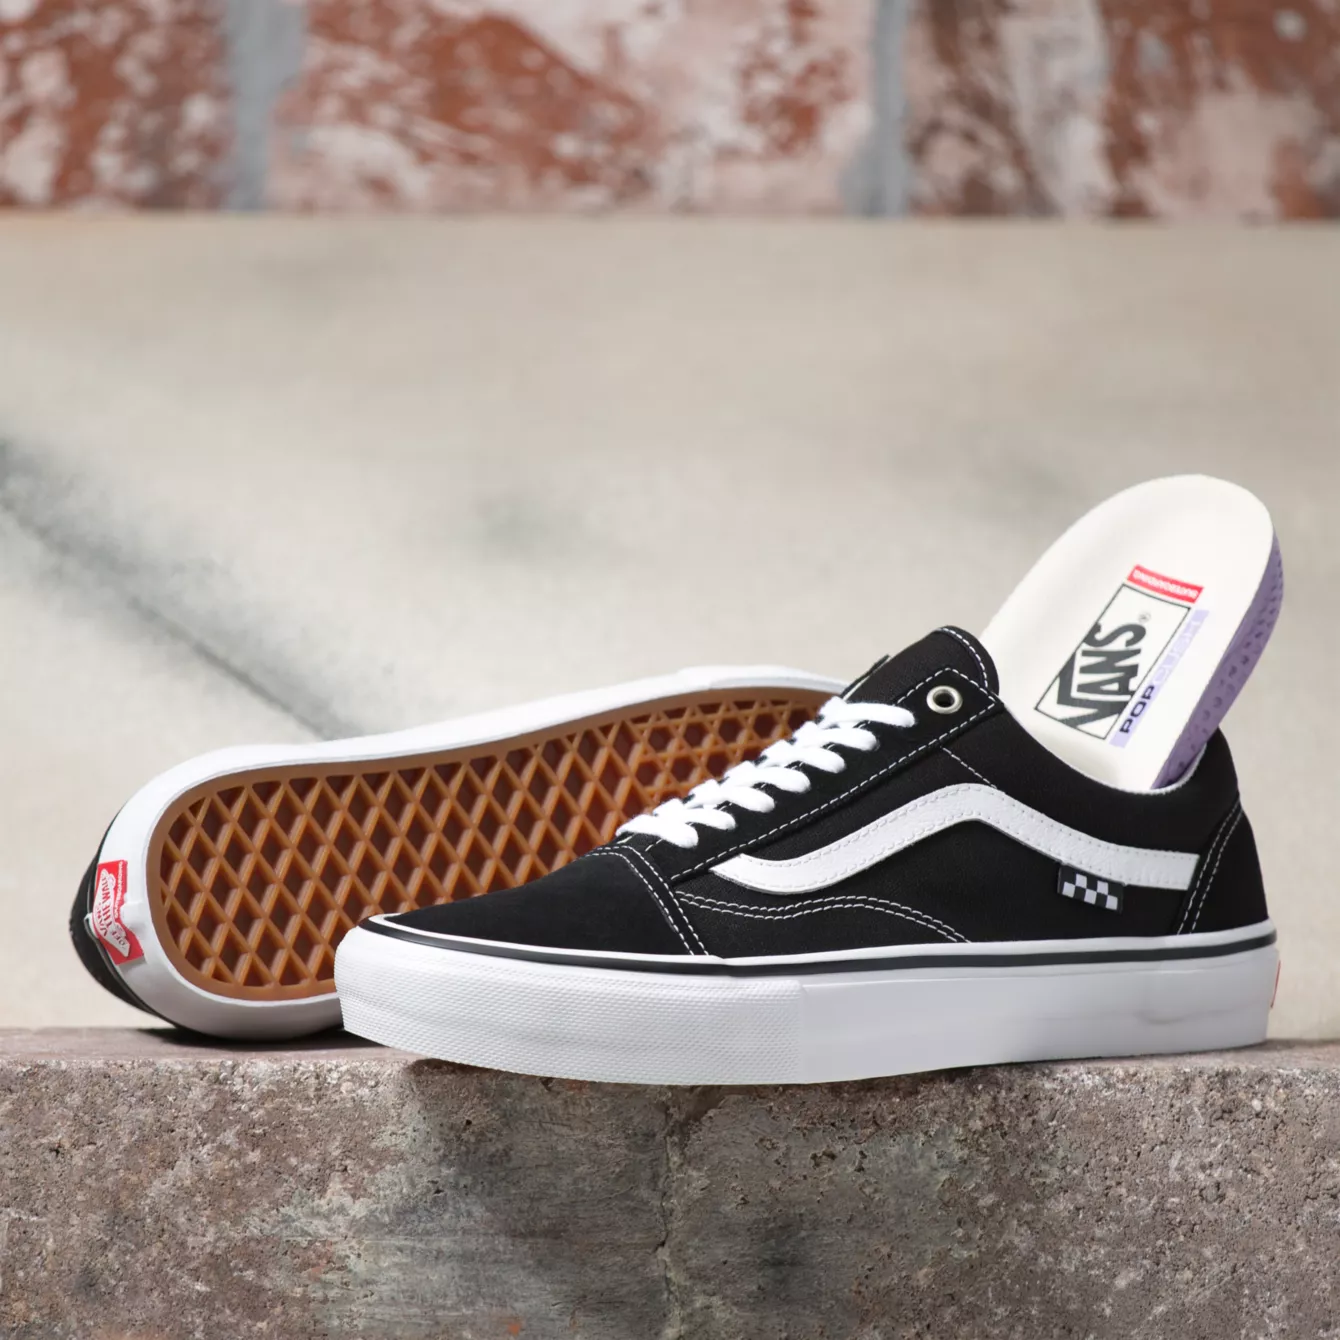 Vans Shoes Skate Old Skool Black/White